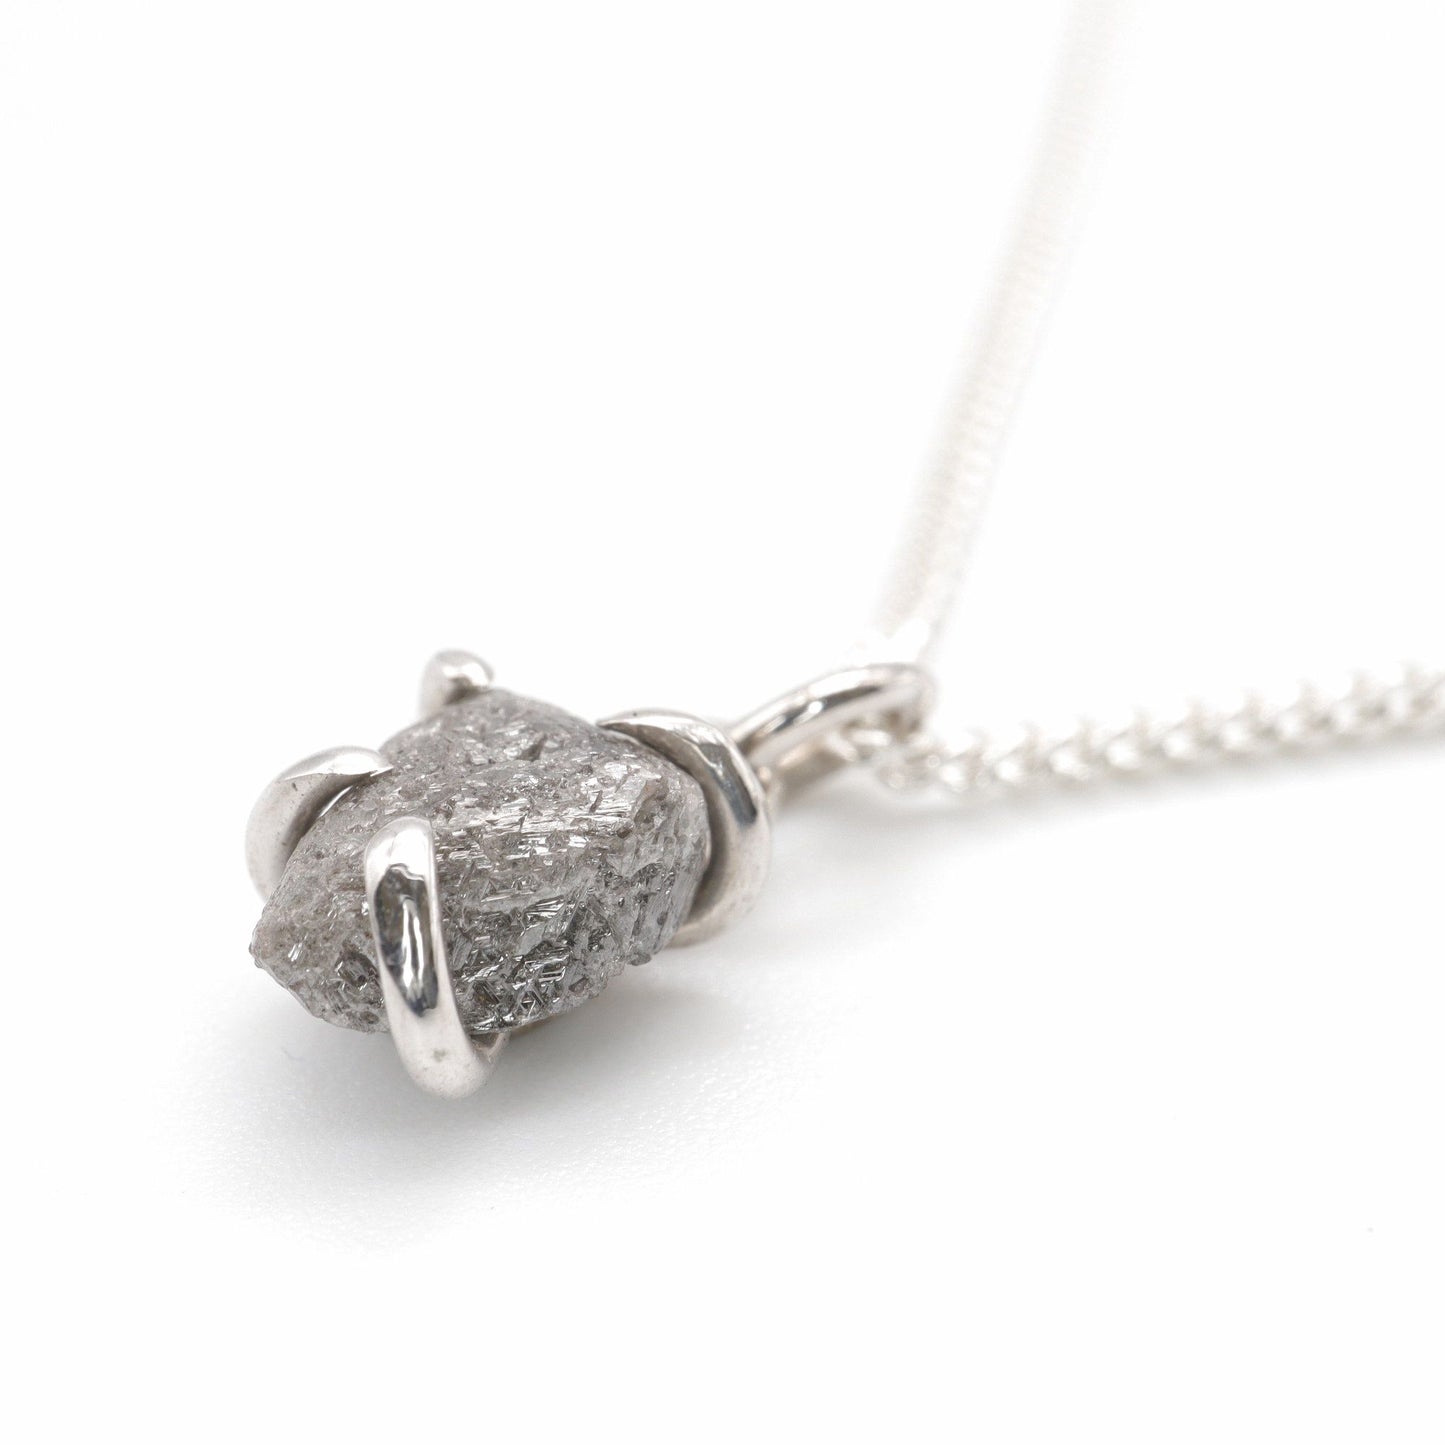 Uncut natural grey diamond handmade pendant